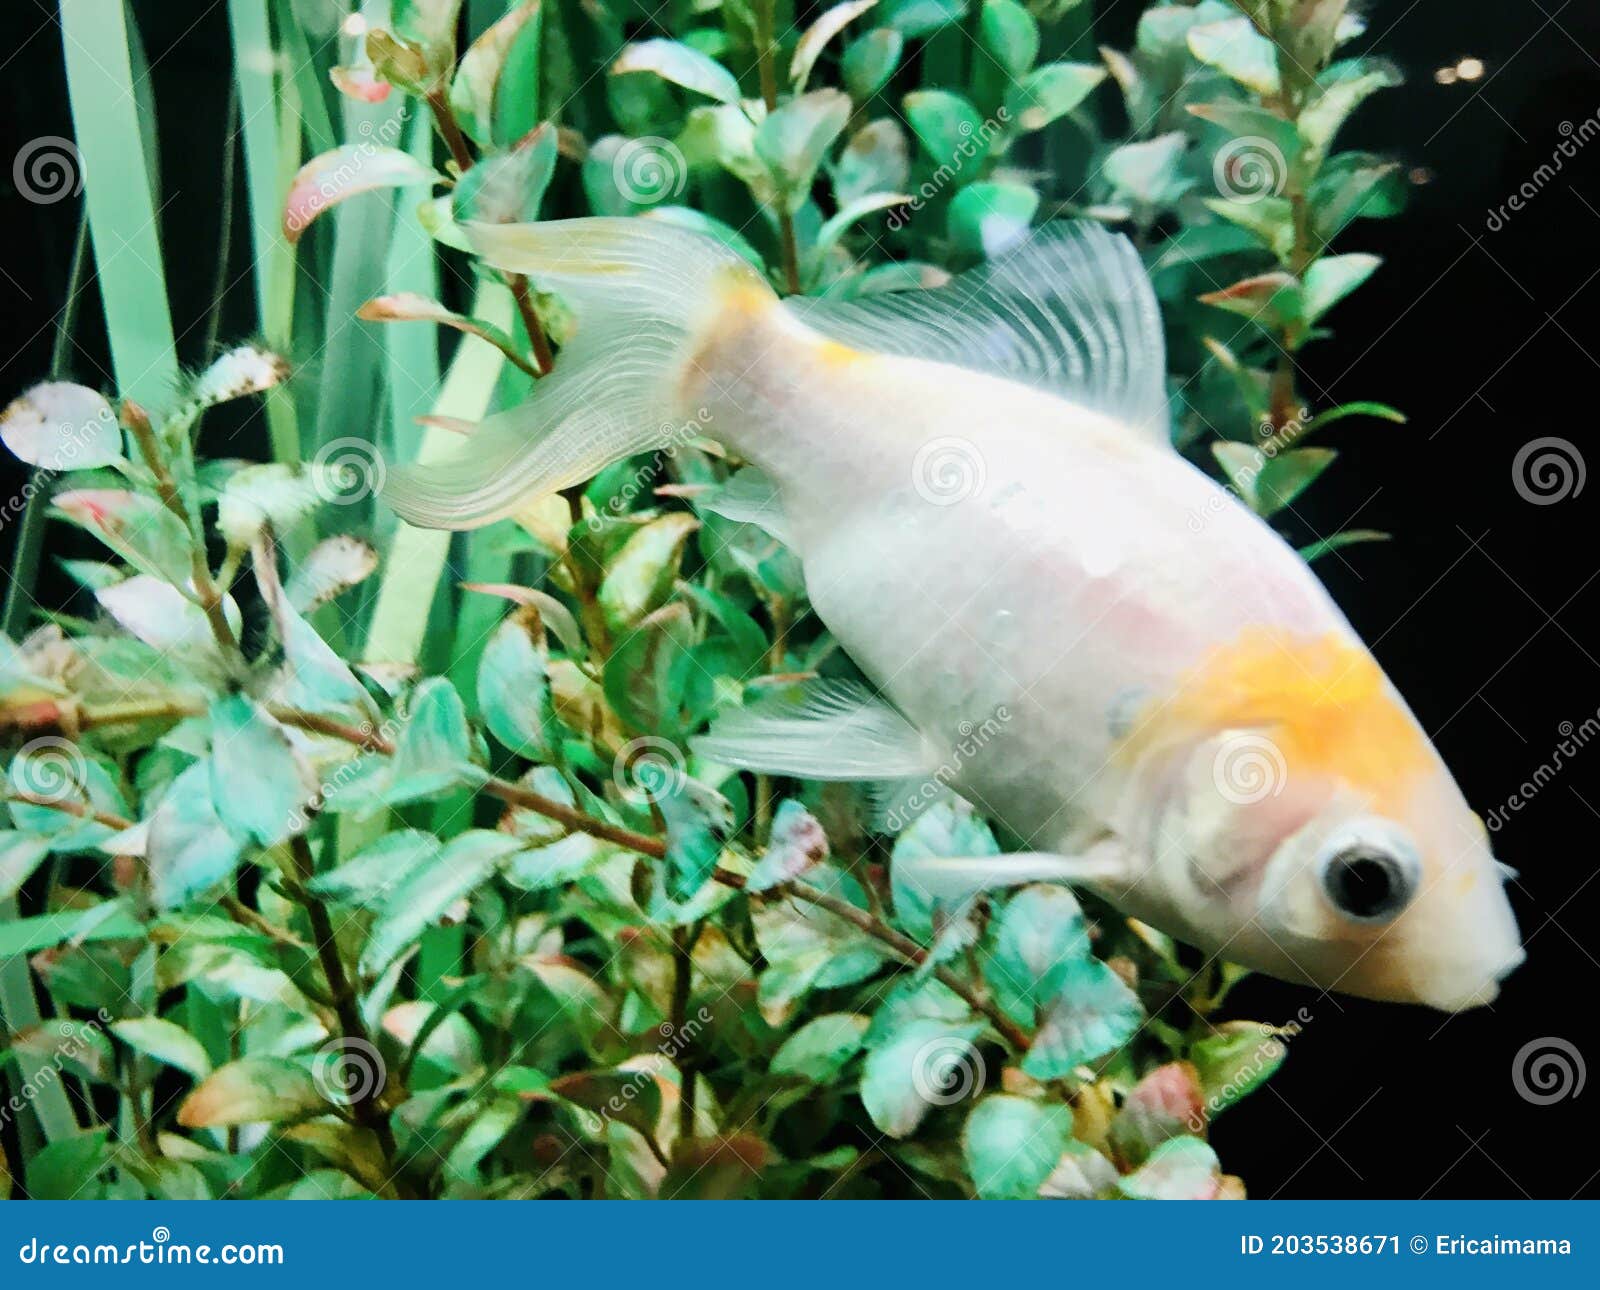 Gold Fish in Aquarium Tank. Swimming Down. Stock Image - Image of home,  black: 203538671